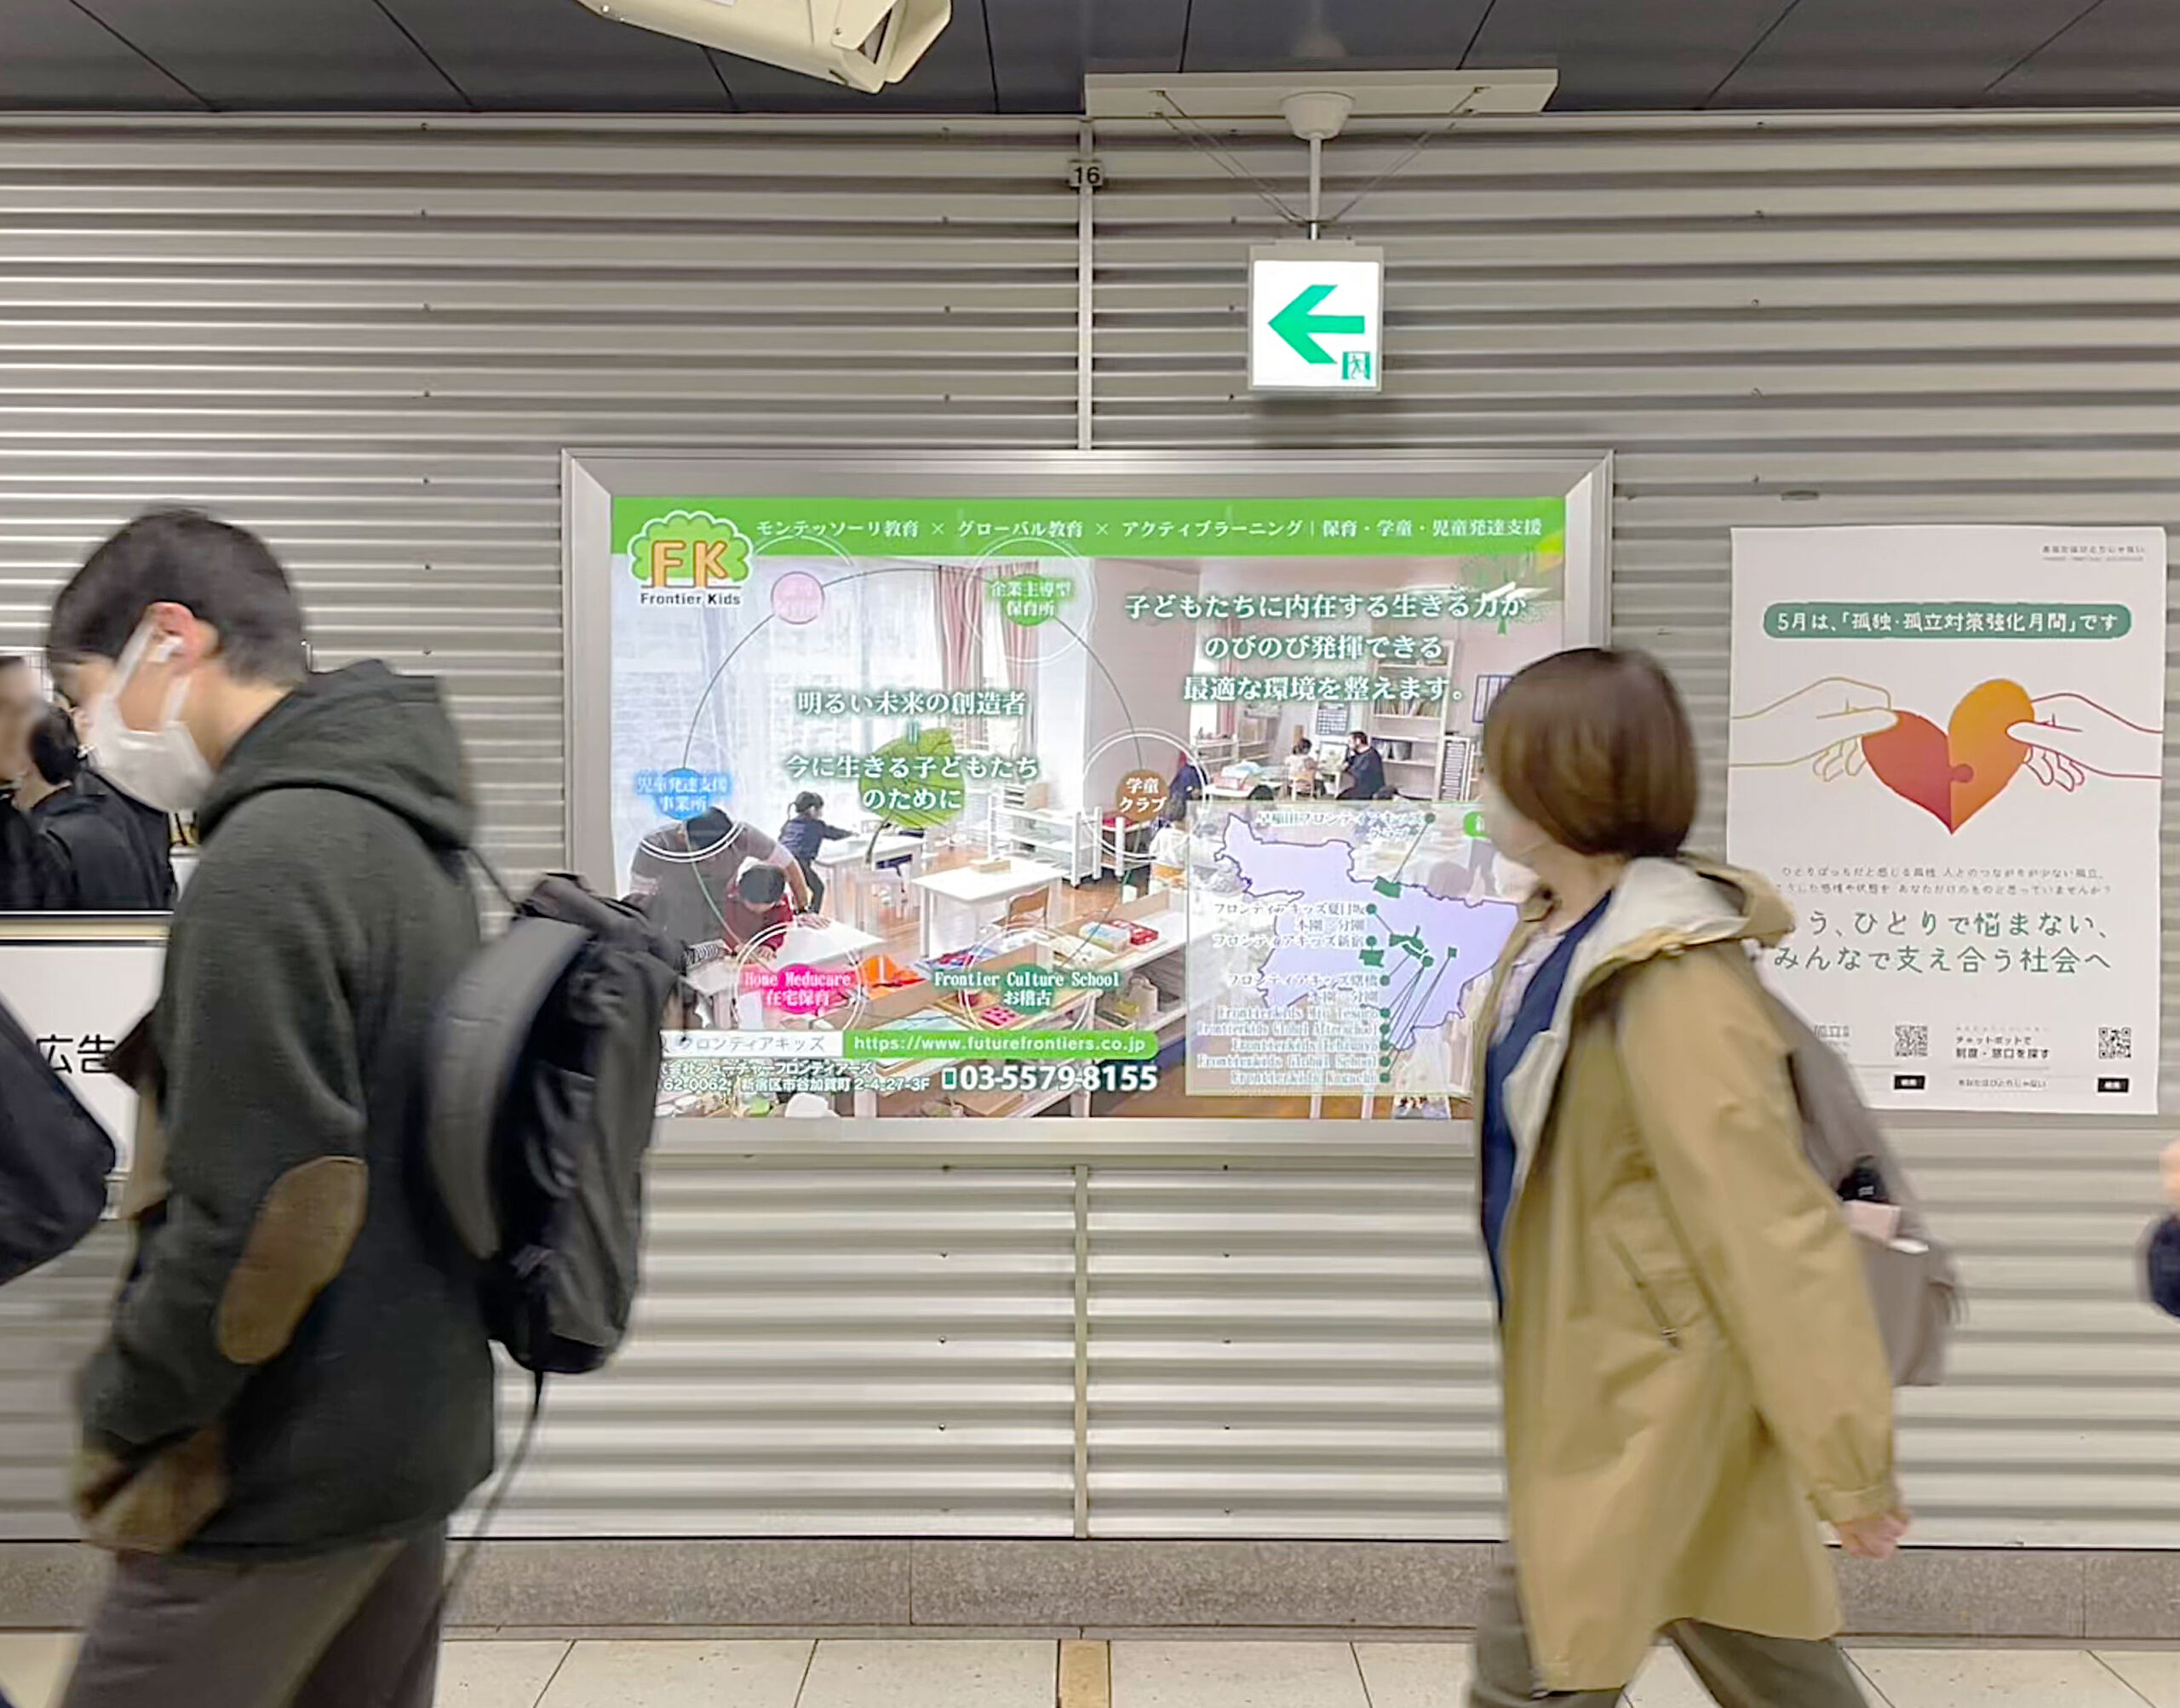 【NEWS】都営大江戸線 若松河田駅 改札内に看板広告を掲示しました